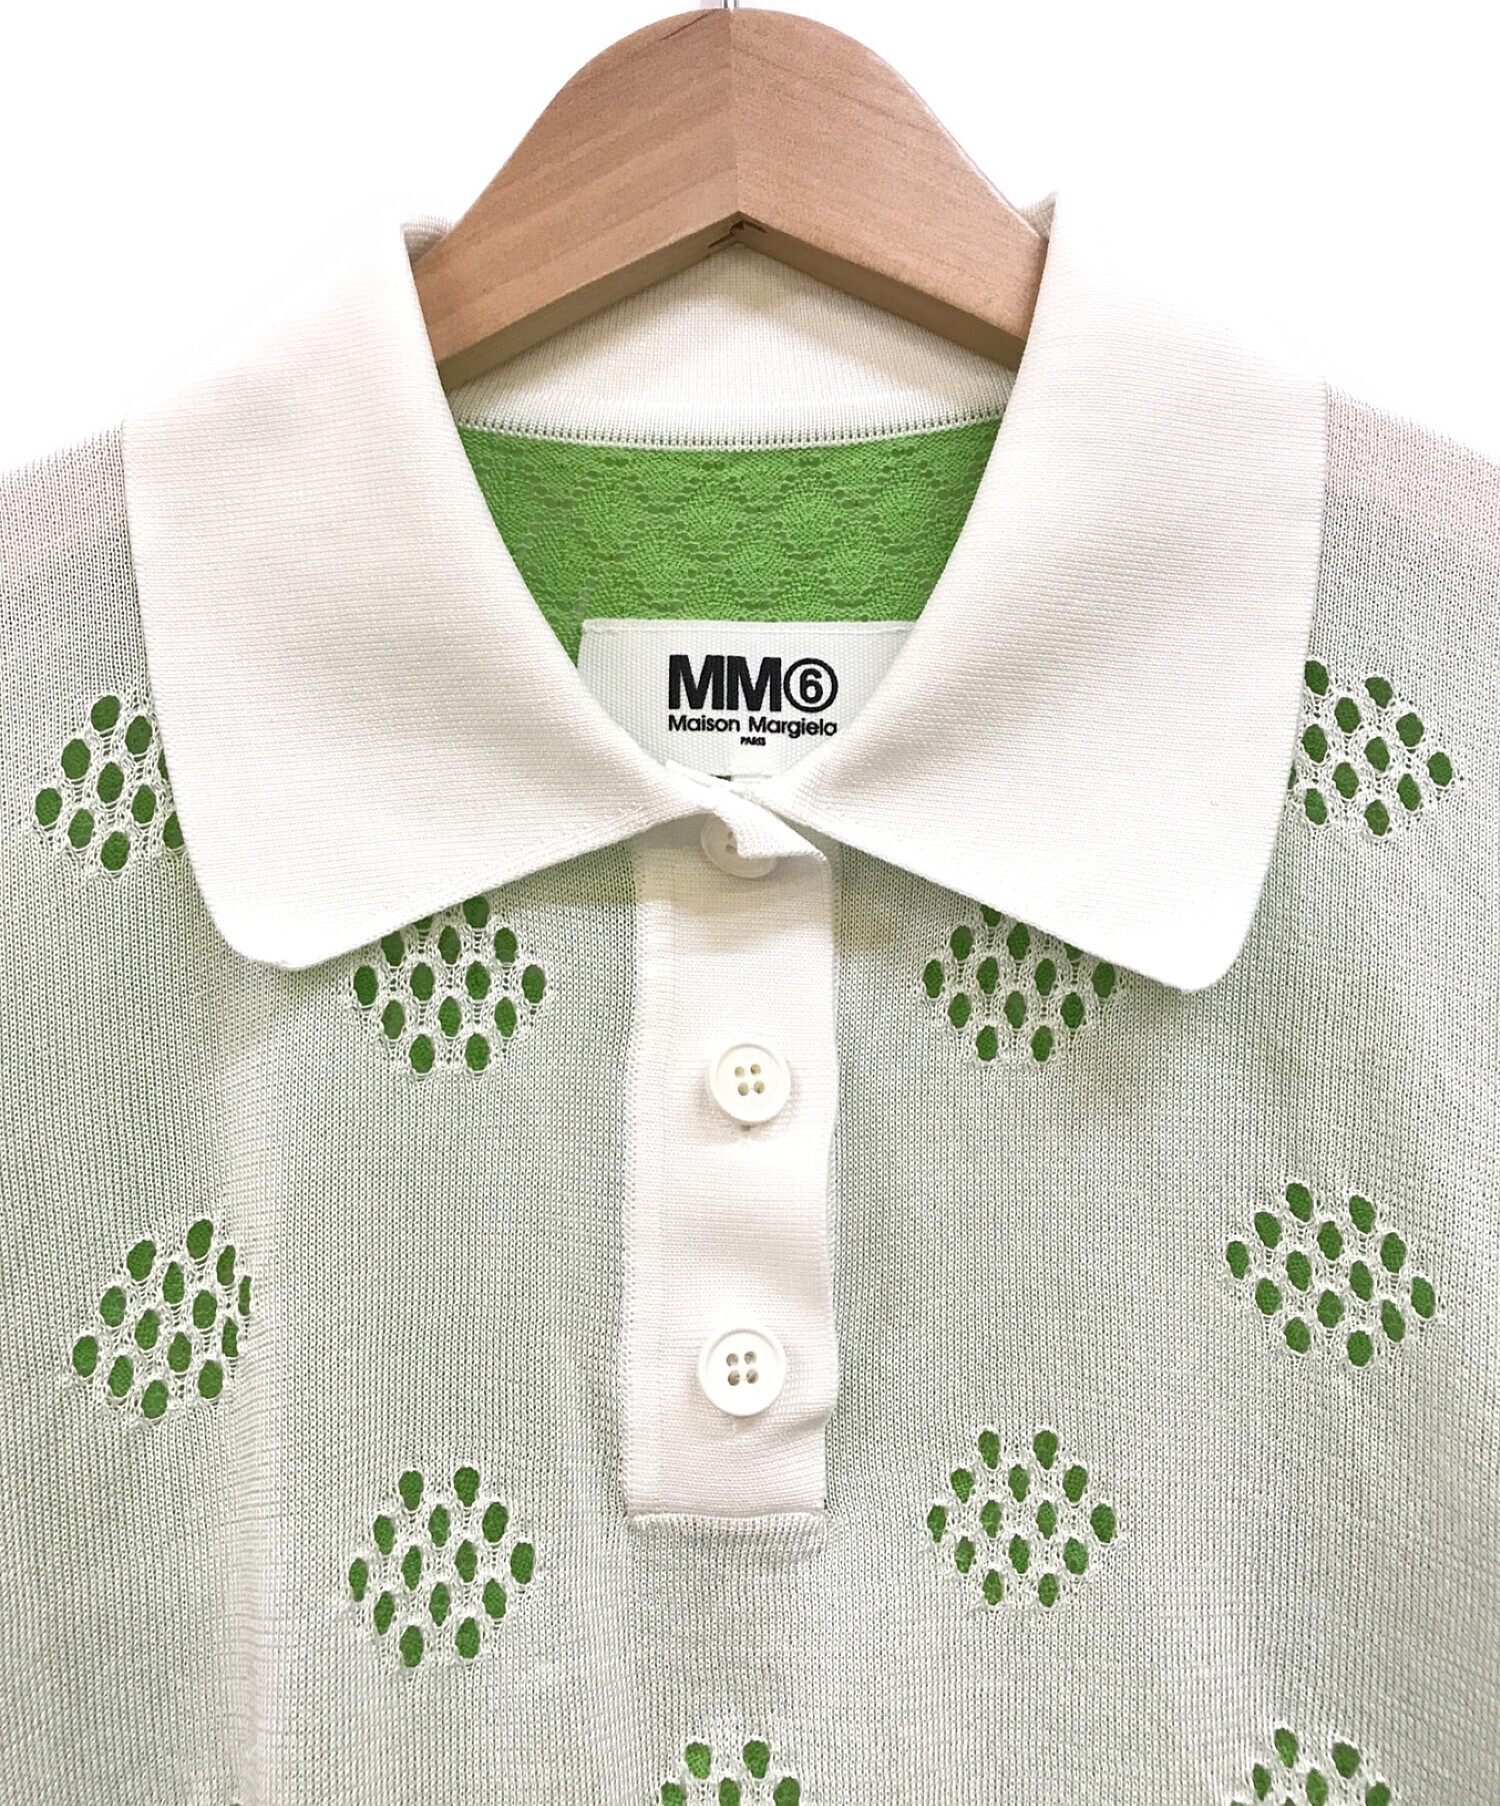 MM6 Maison Margiela (エムエムシックス メゾンマルジェラ) ツートーンカラー ニット ポロシャツ グリーン×ホワイト サイズ:S